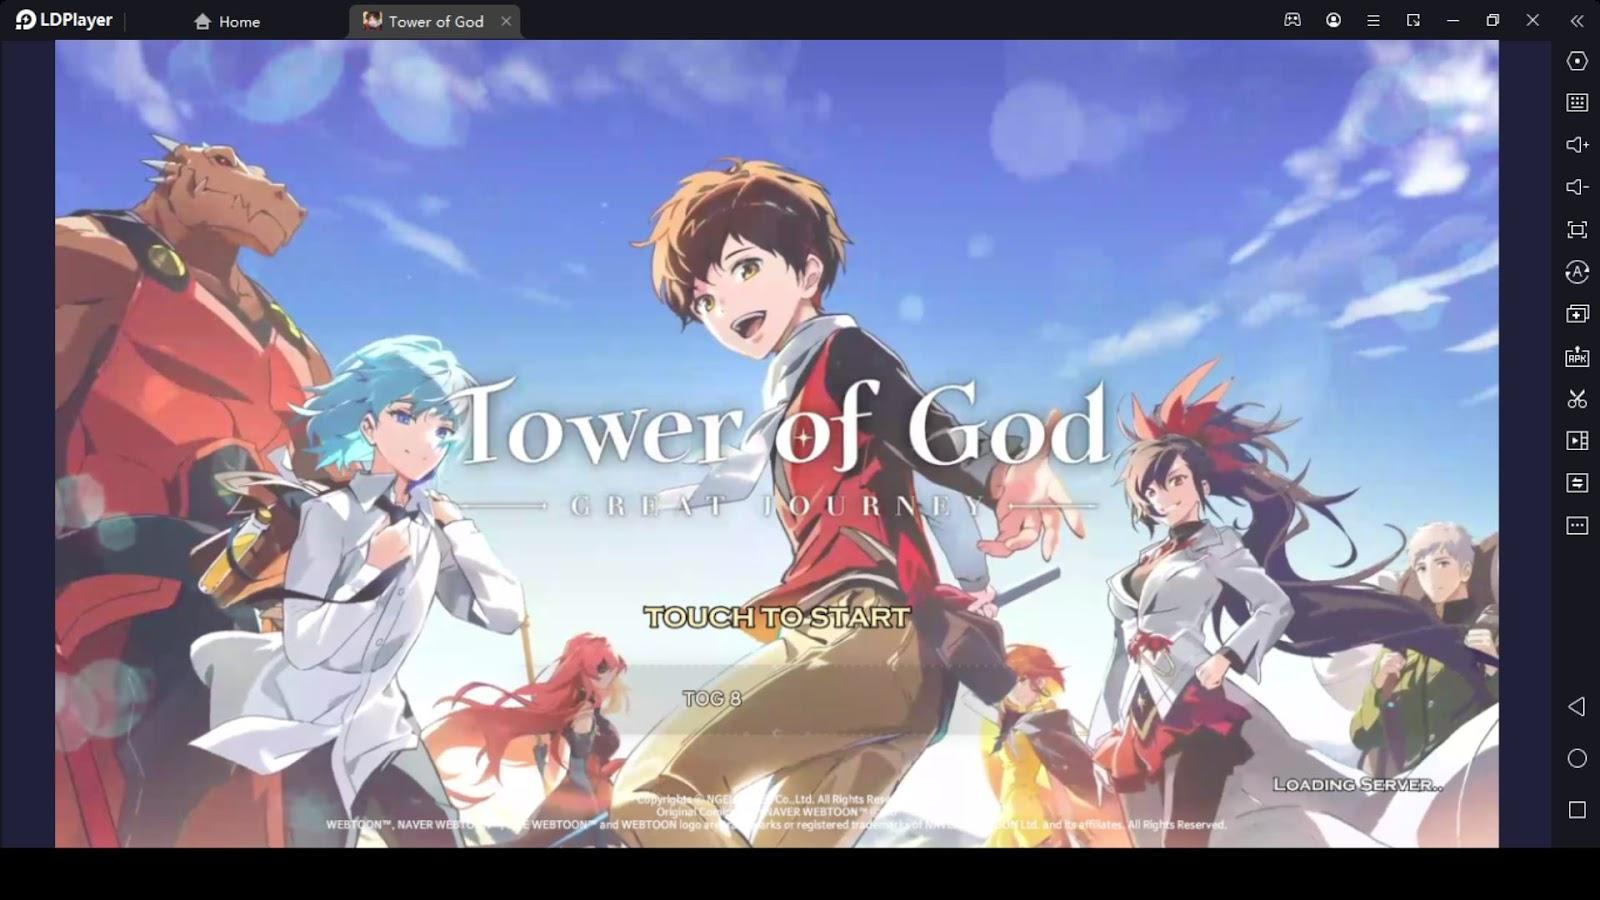 TOWER OF GOD:great journey , NOVO RPG DE AMINE JA TEM DATA PARA